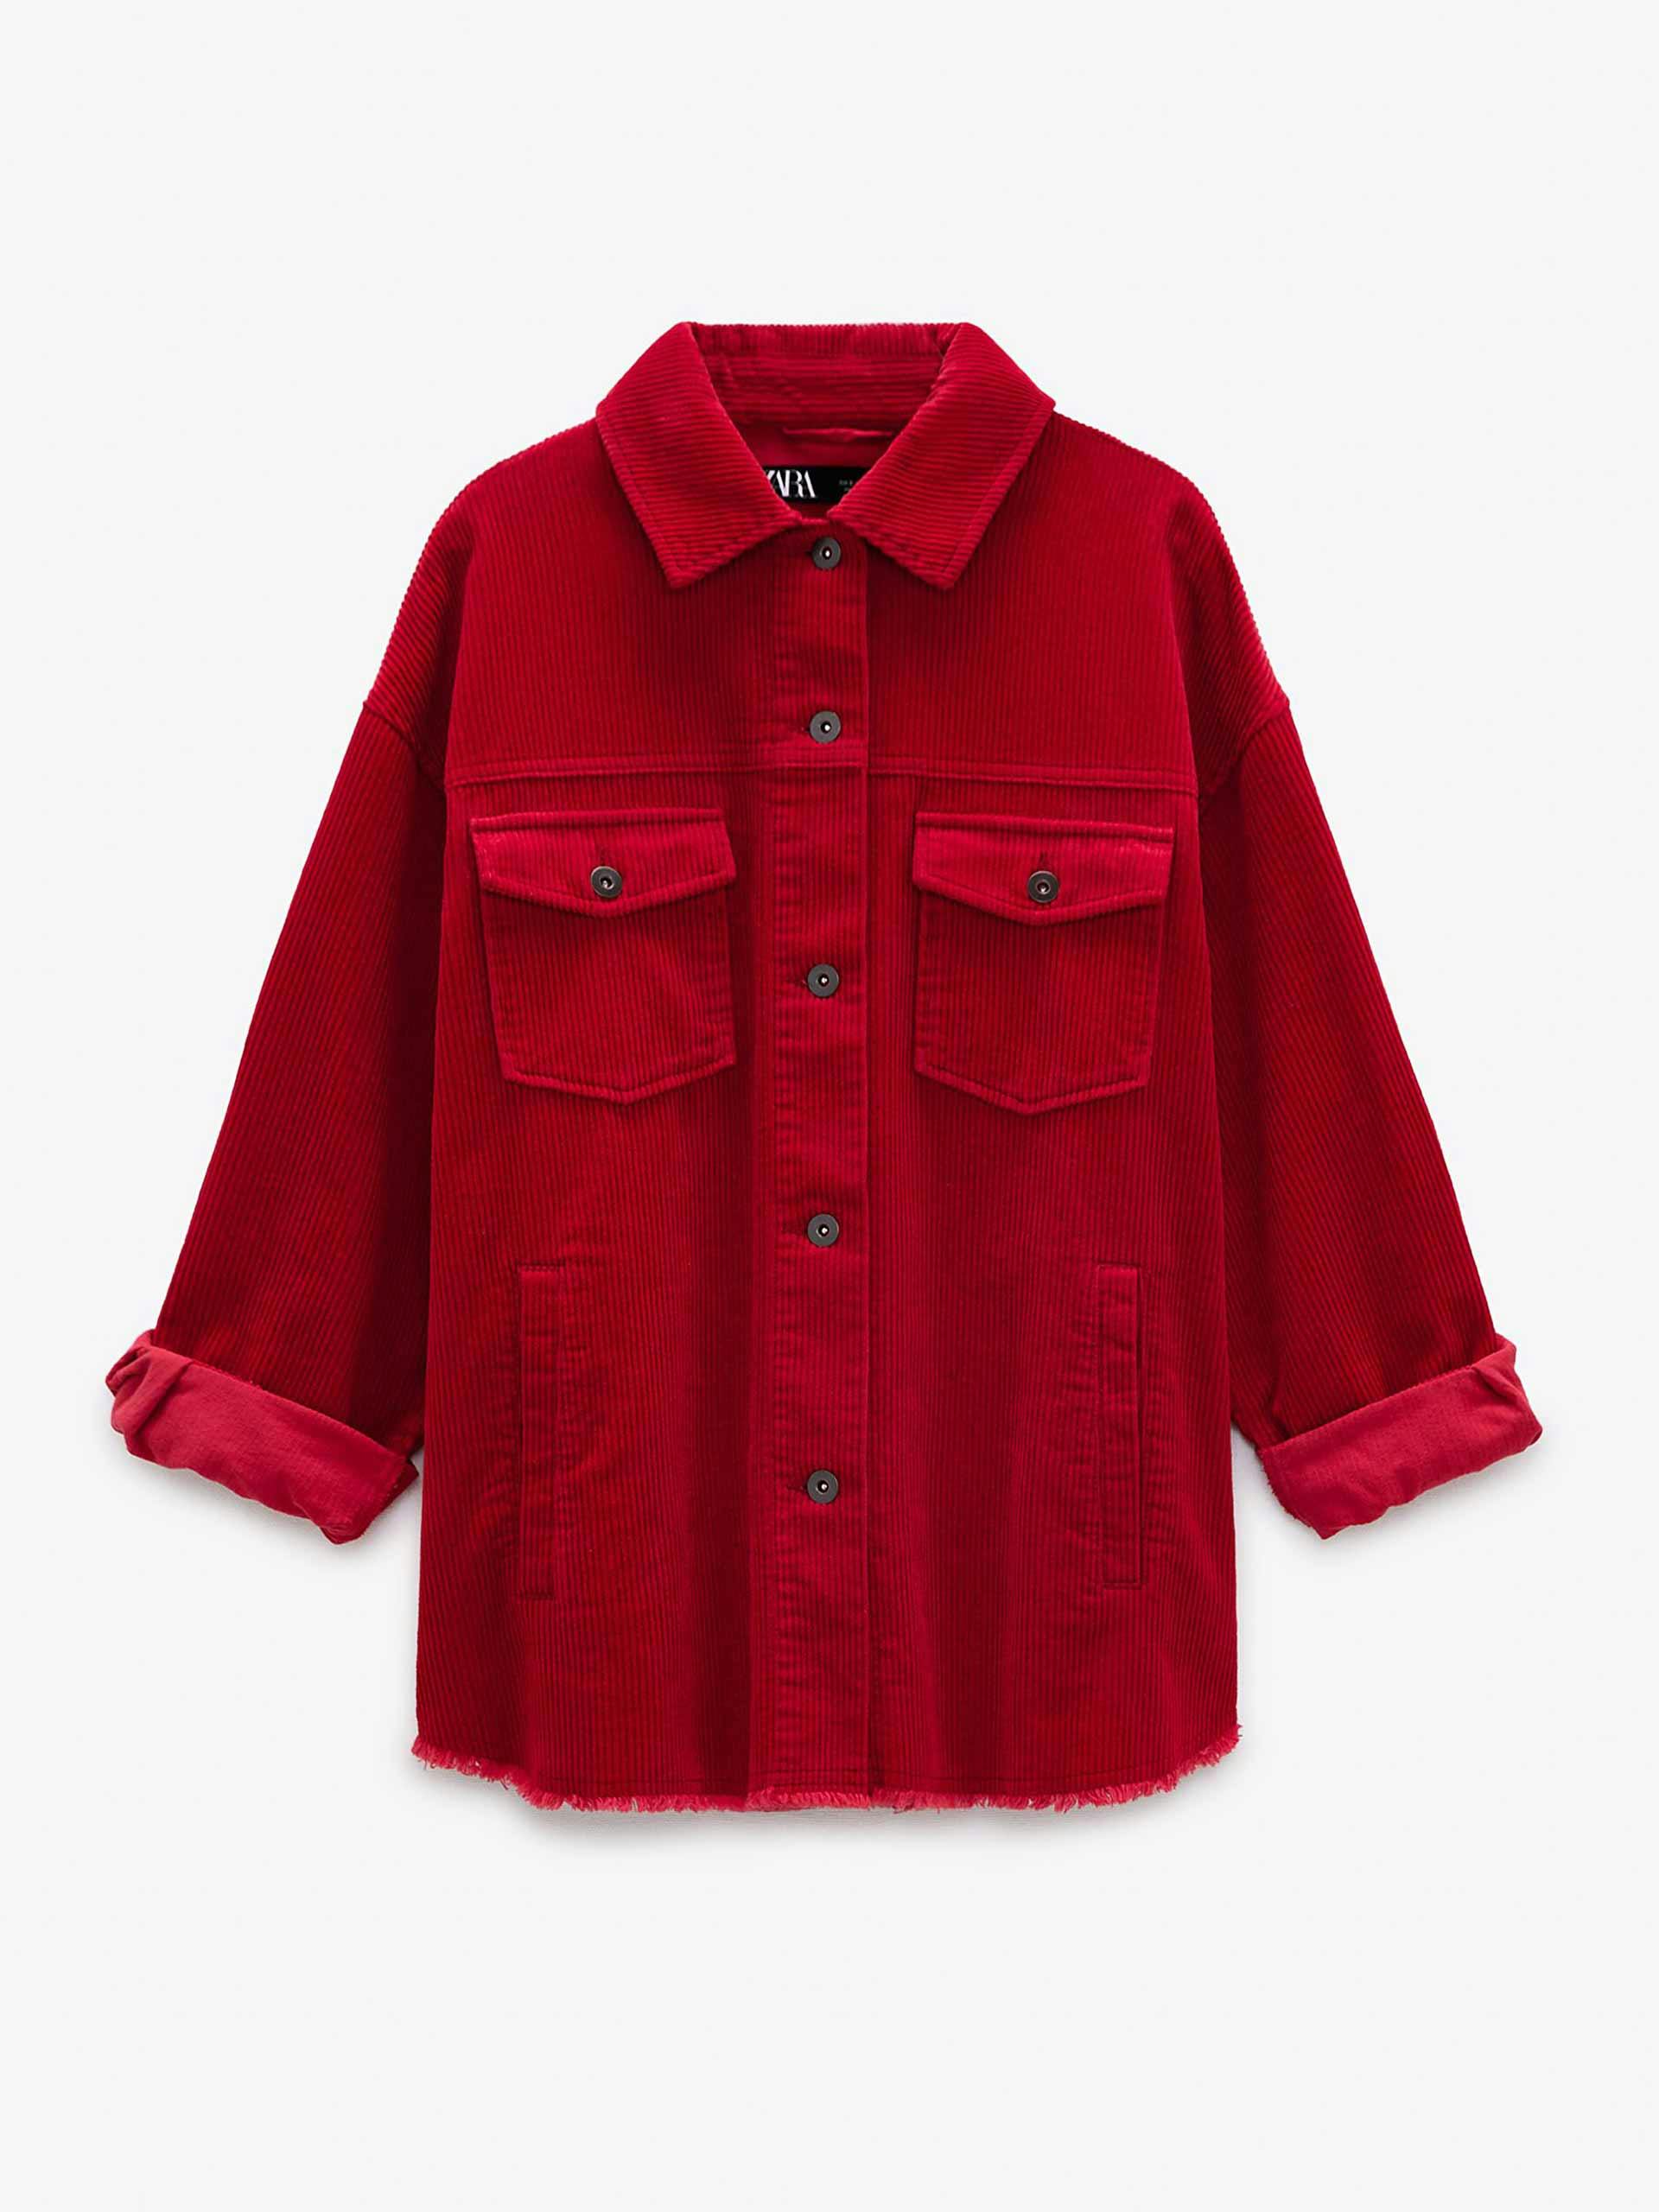 Red corduroy overshirt